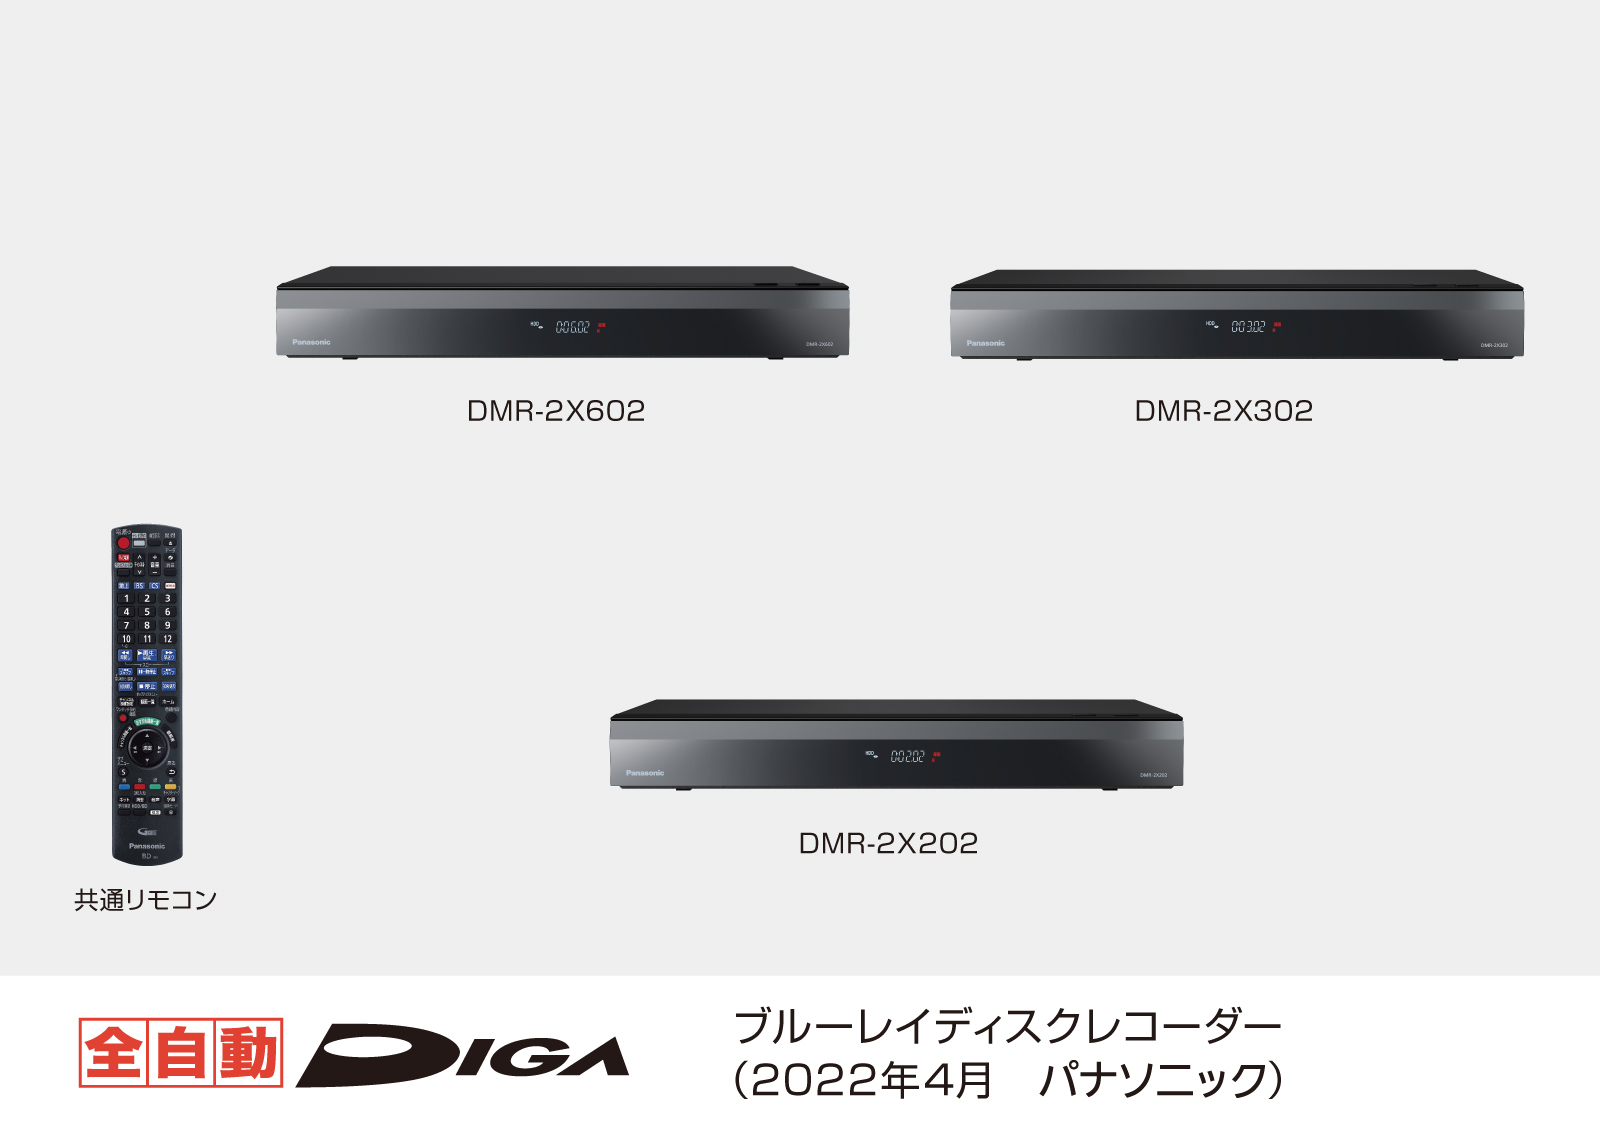 Panasonic DMR-2X302 BLACK 【メール便不可】 - プレーヤー